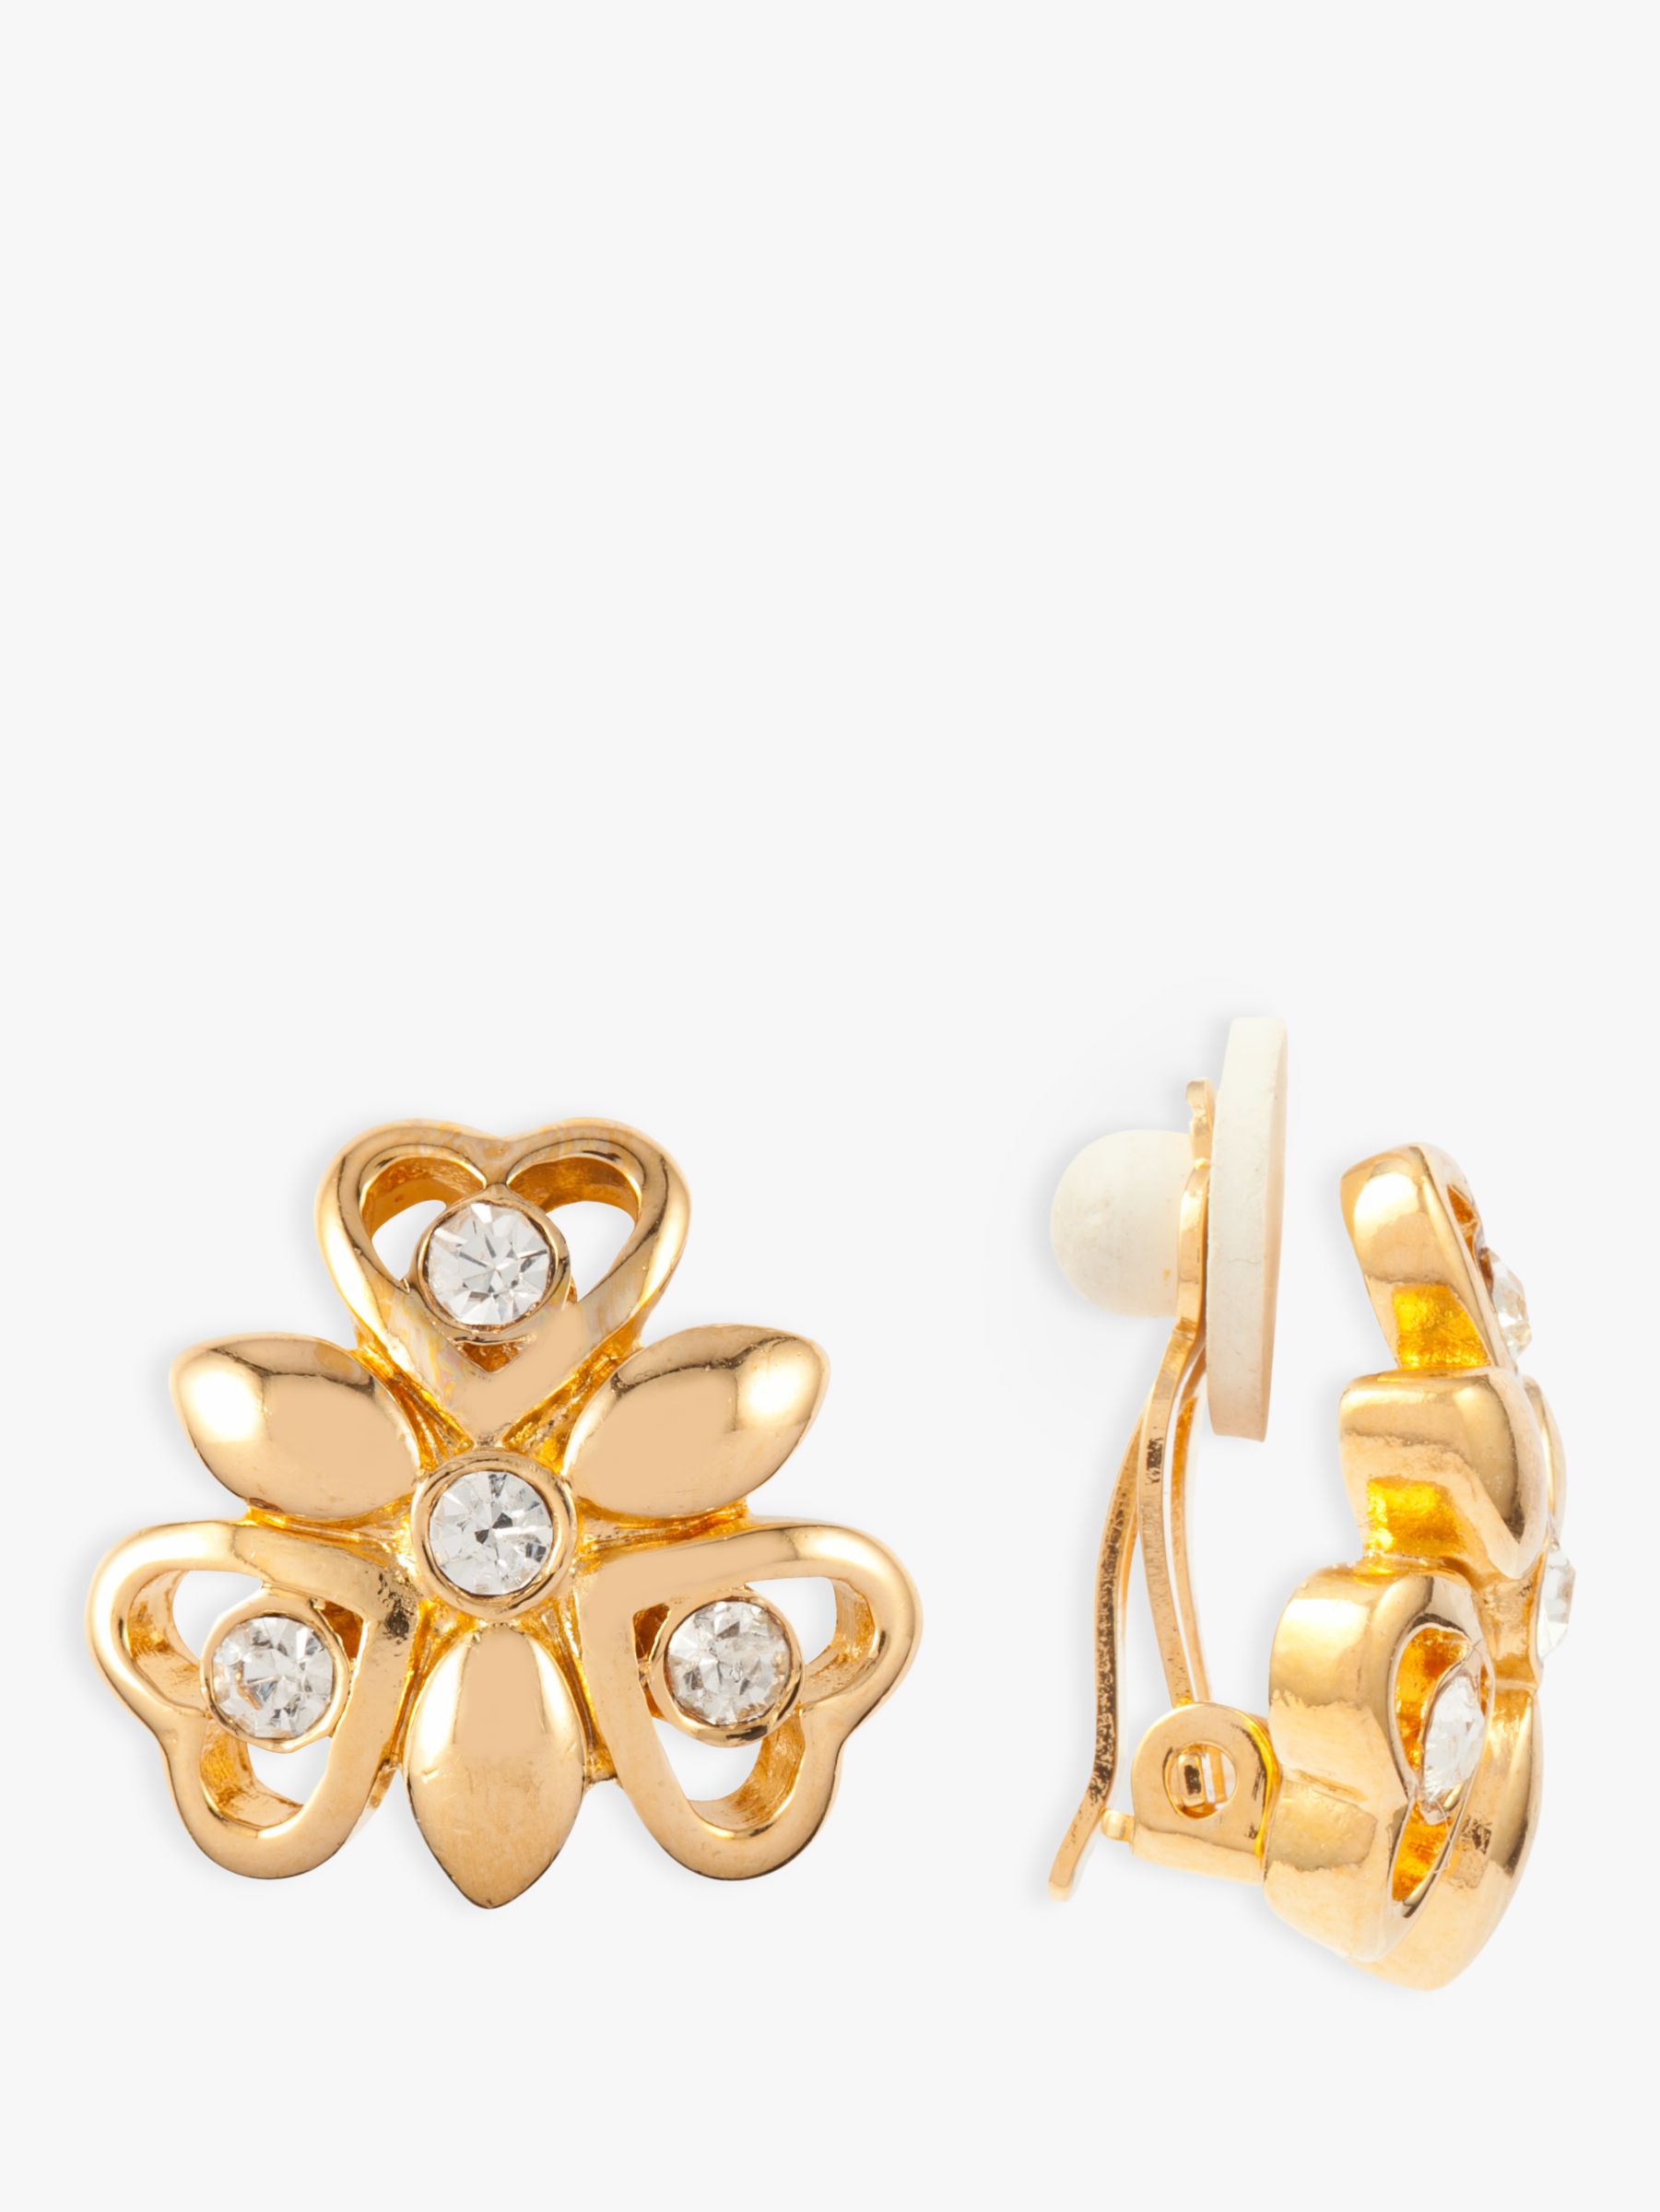 Susan Caplan Vintage Nina Ricci 22ct Gold Plated Swarovski Crystal Triple Heart Shape Clip-On Earrings, Gold